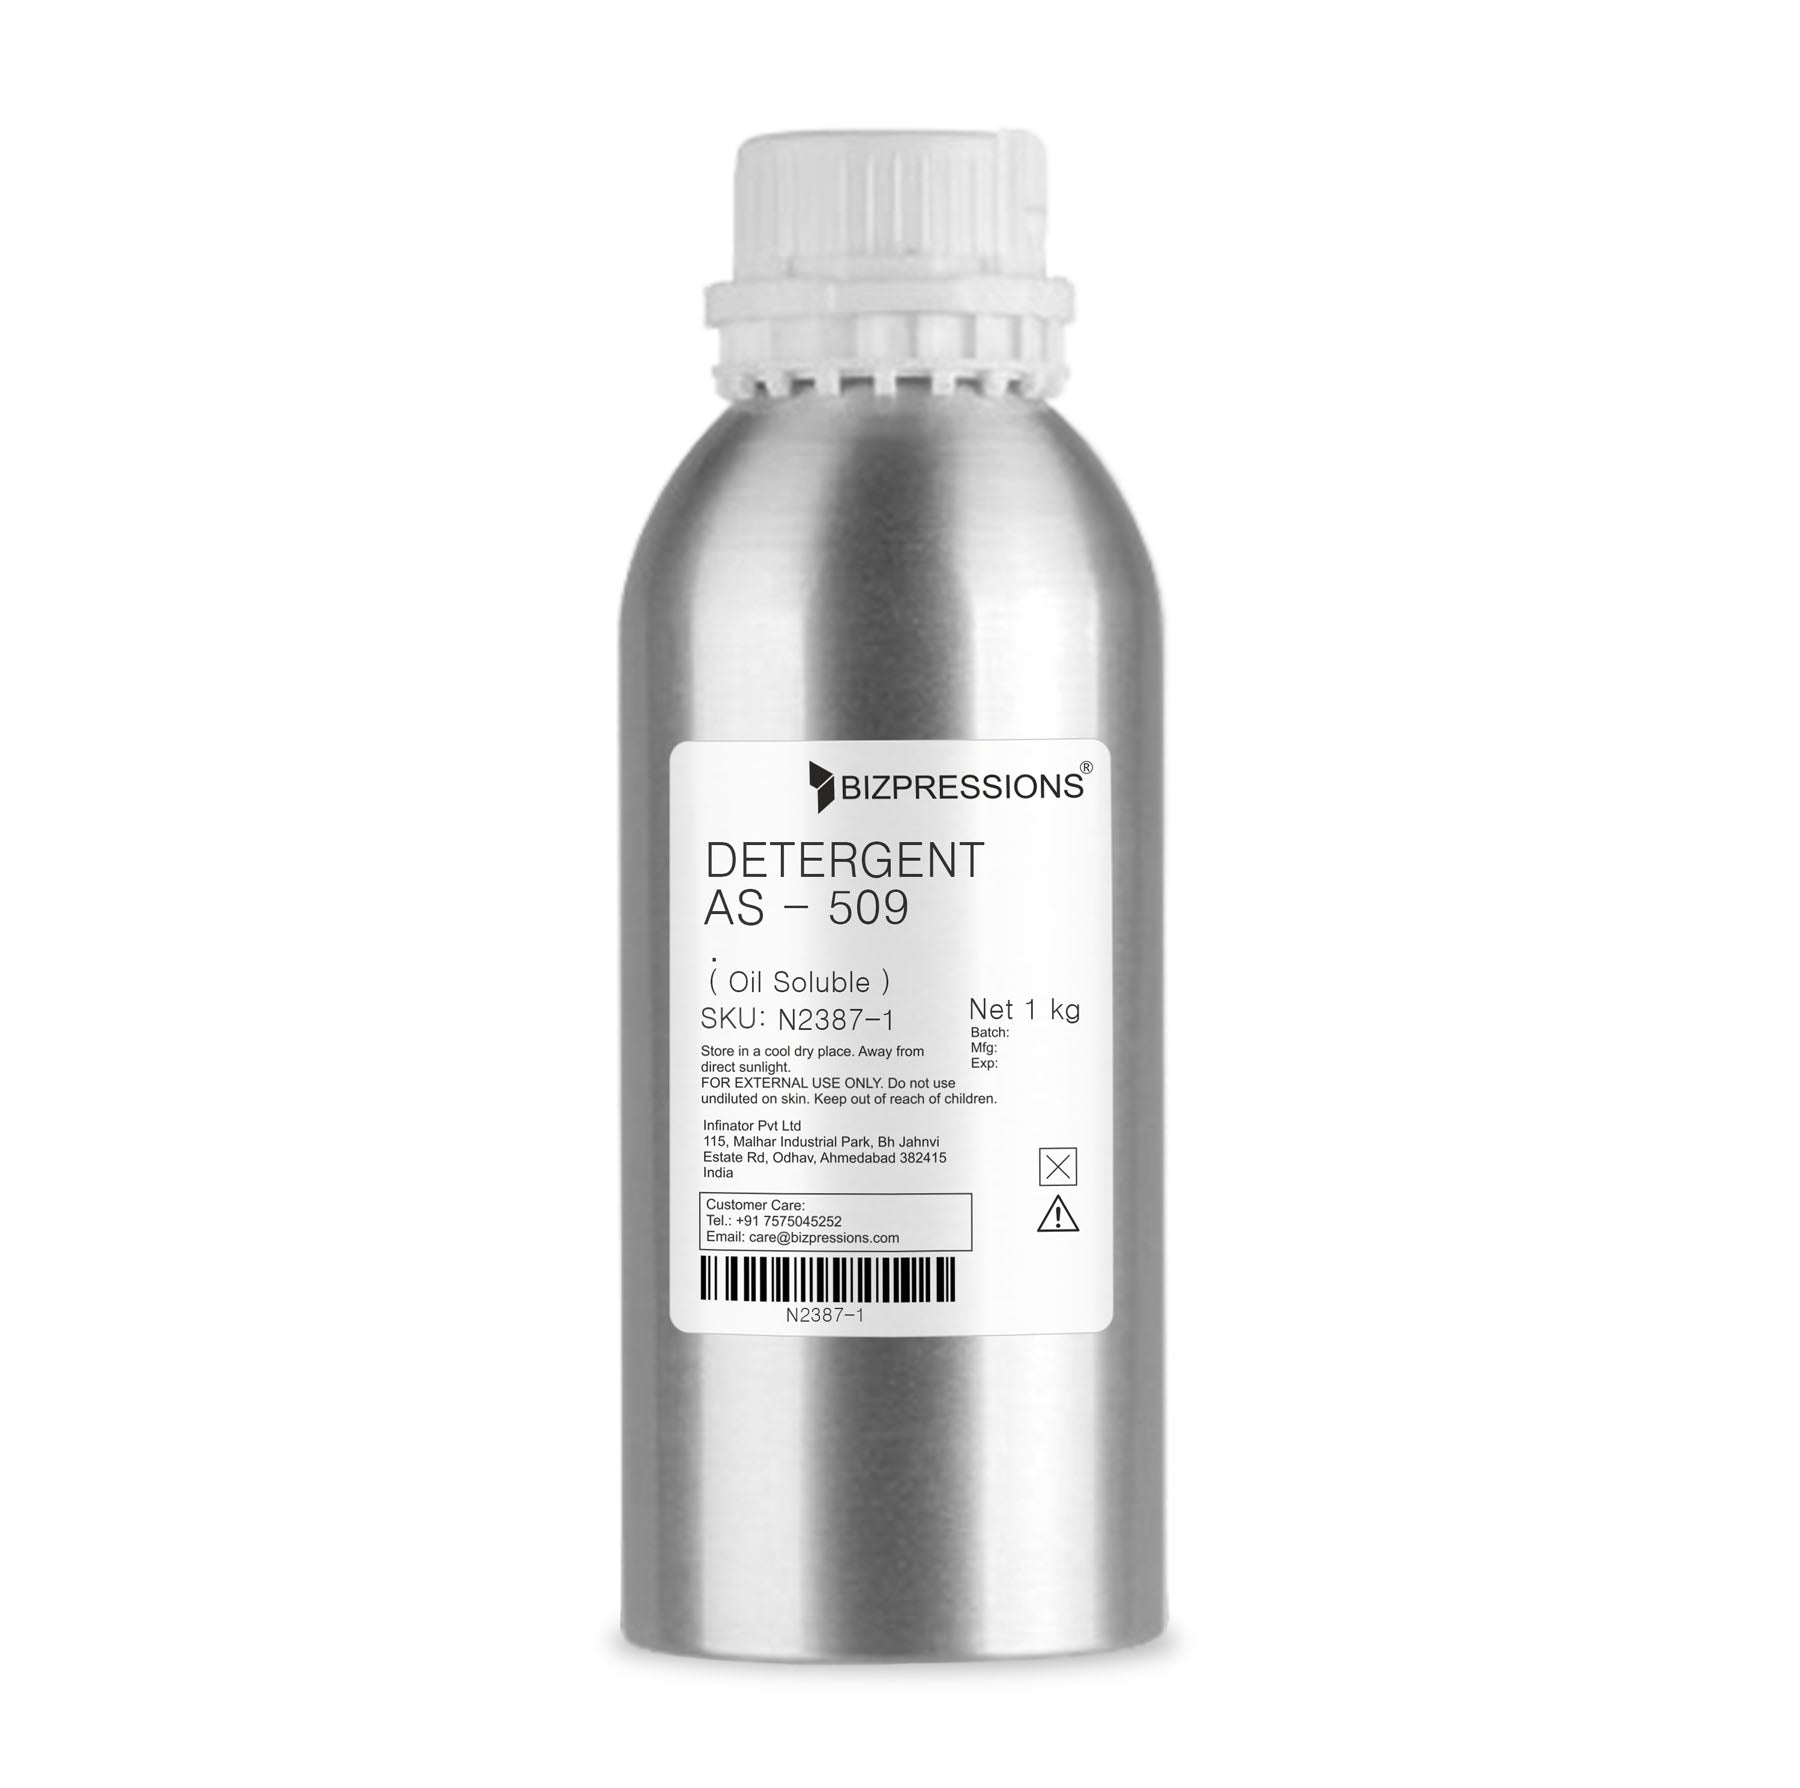 DETERGENT AS - 509 - Fragrance ( Oil Soluble ) - 1 kg